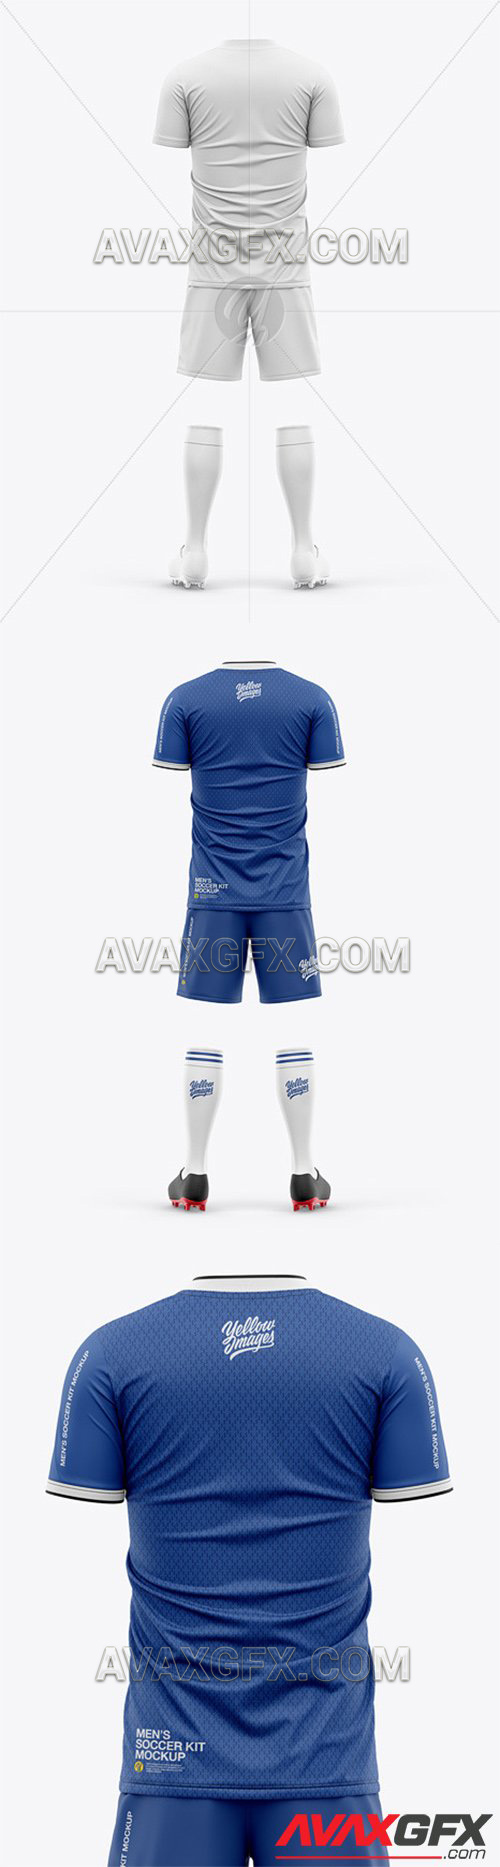 Men’s Full Soccer Kit with Short Sleeve Jersey Mockup - Back VIew 57124